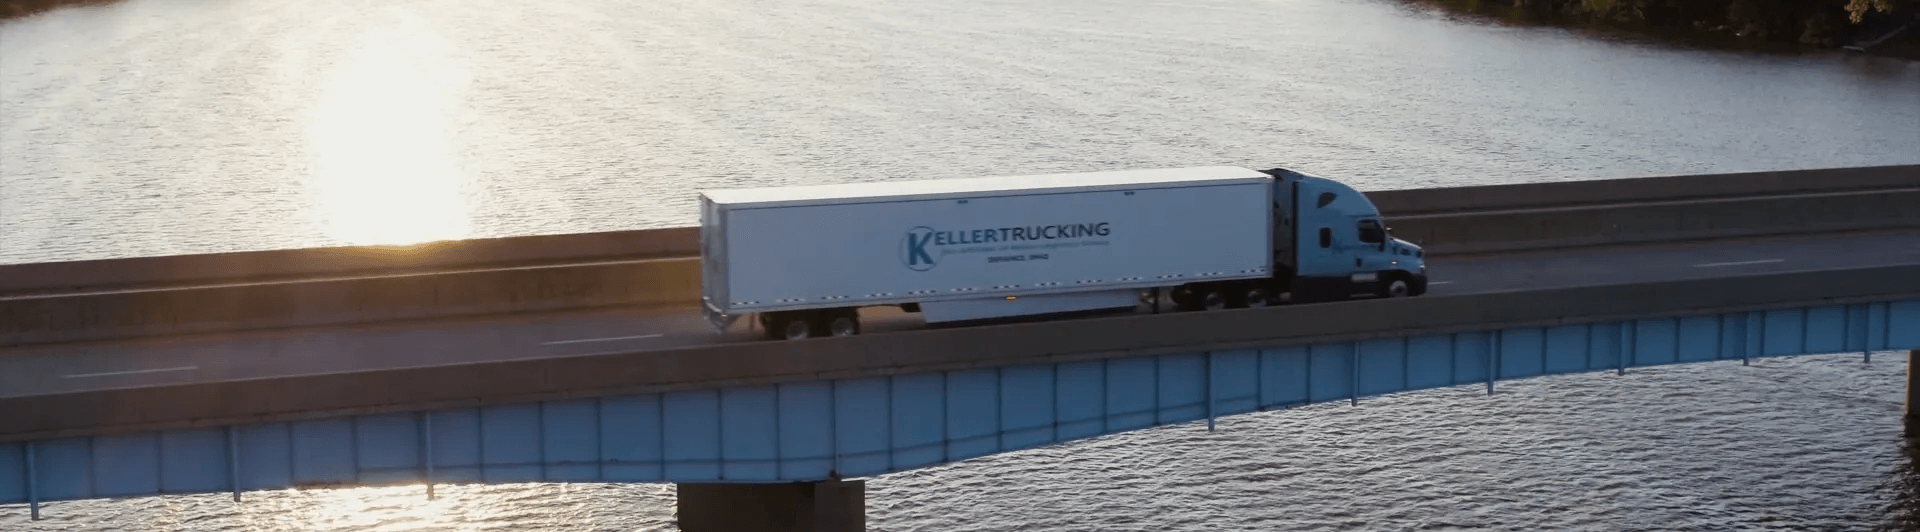 Keller truck driving on a bridge